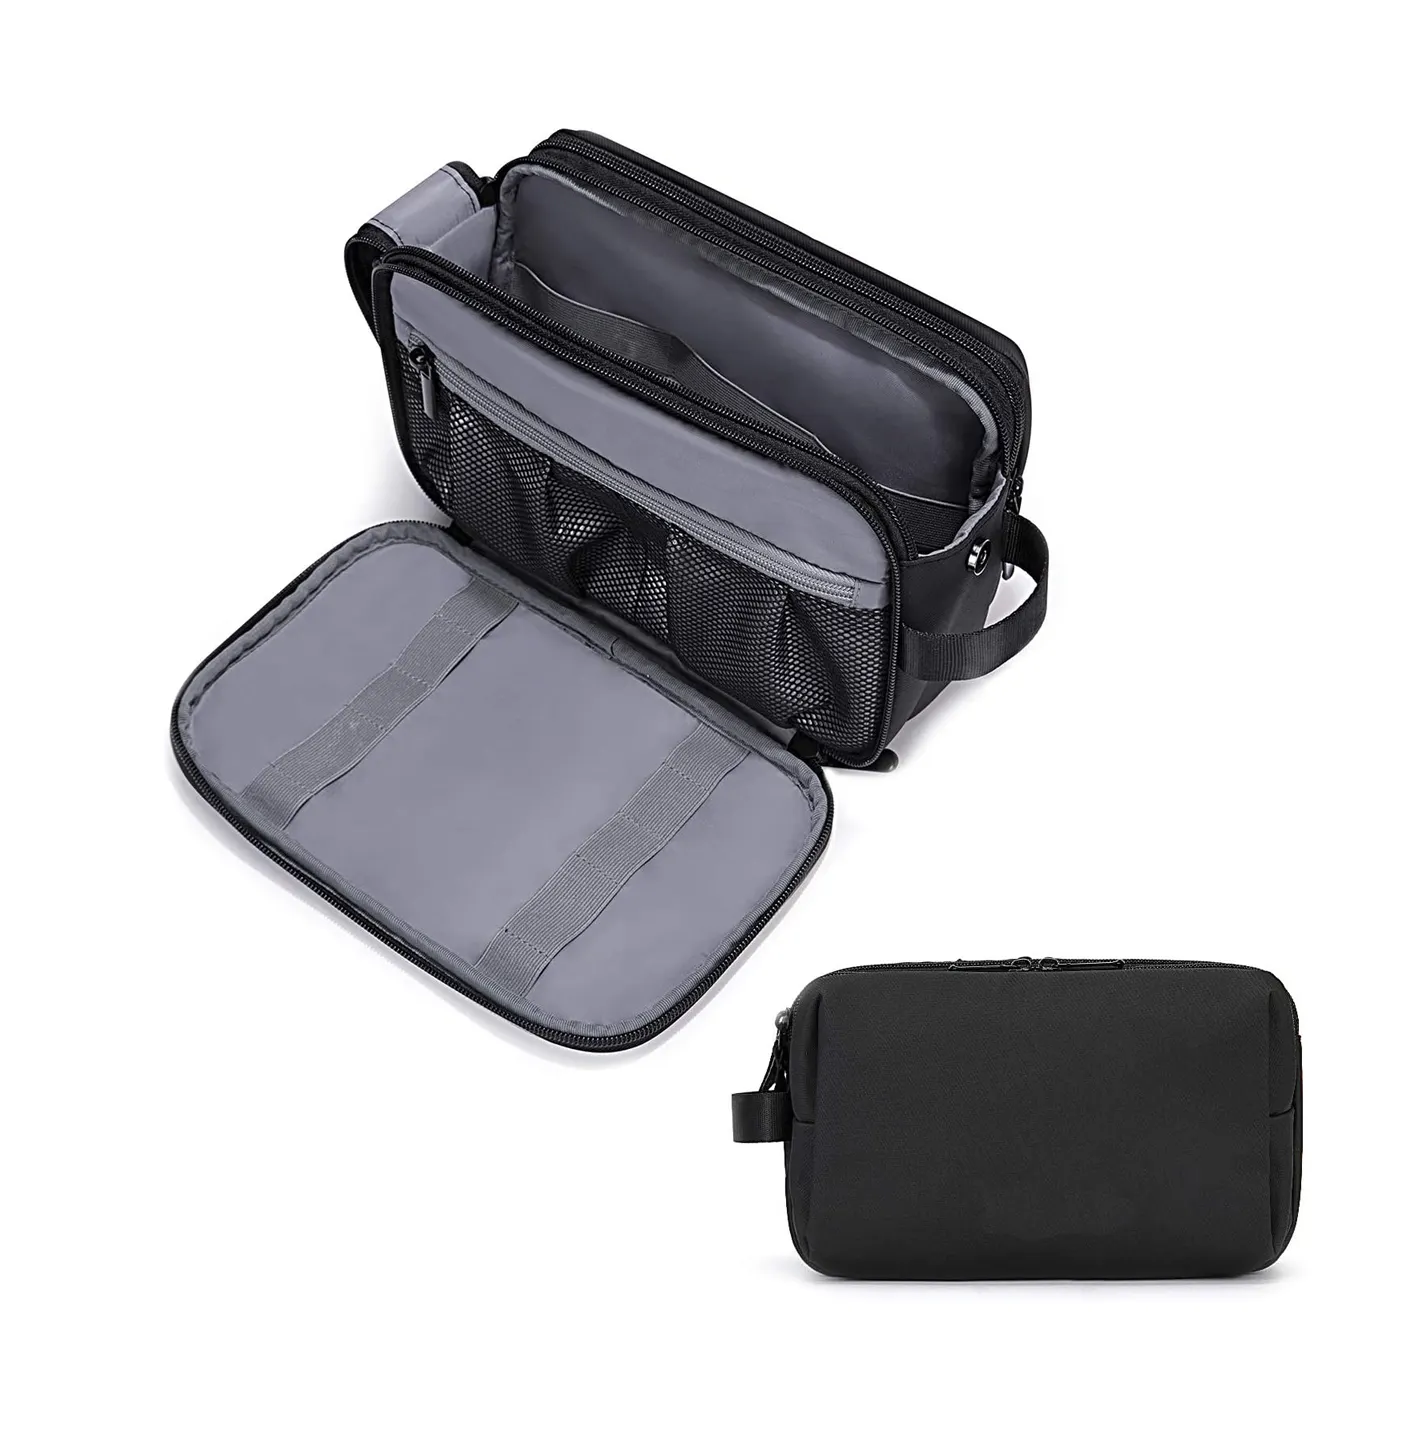 Hot sell custom Travel Toiletry Organizer Dopp Kit Water-resistant Shaving Bag for Toiletries Accessories Toiletry Bag for Men